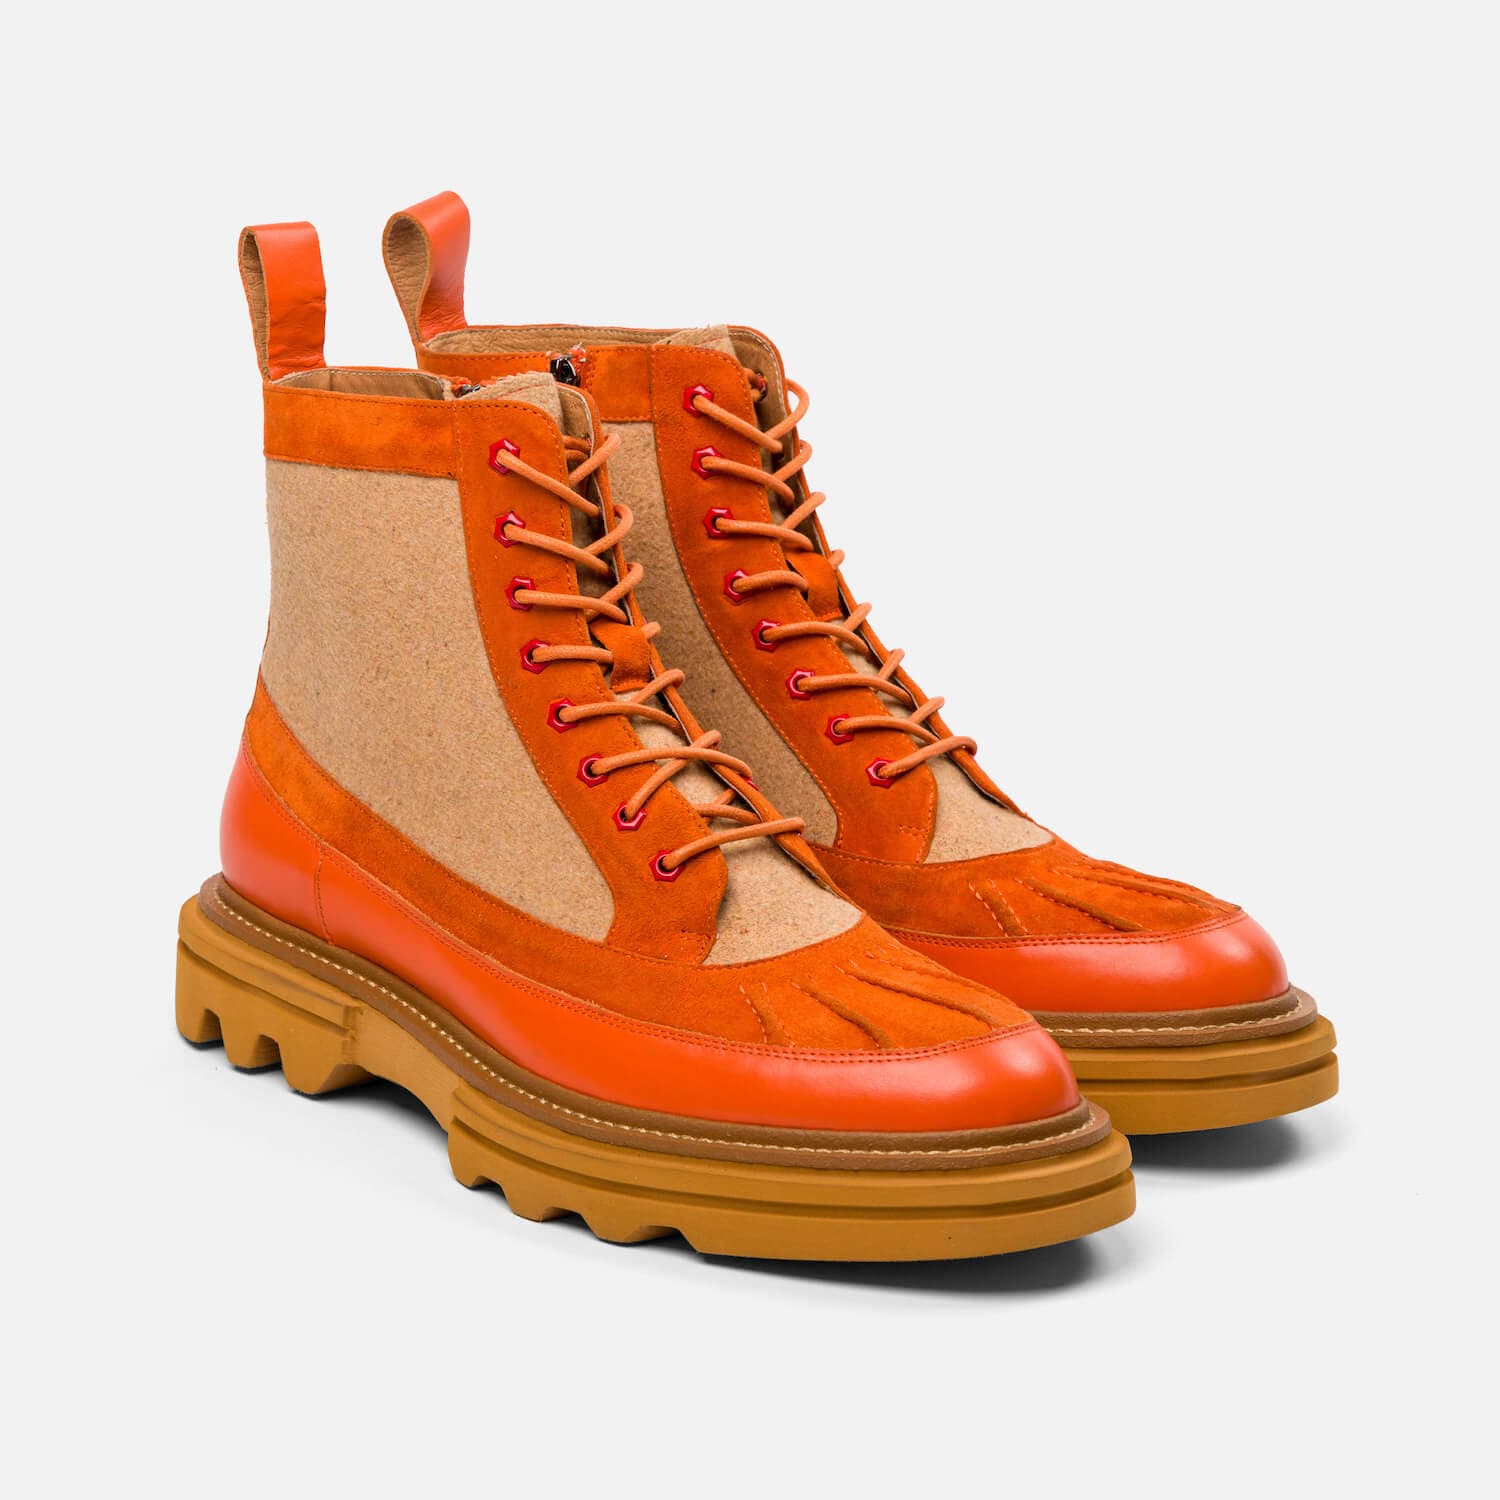 Odin Solar Orange Leather Combat Boots